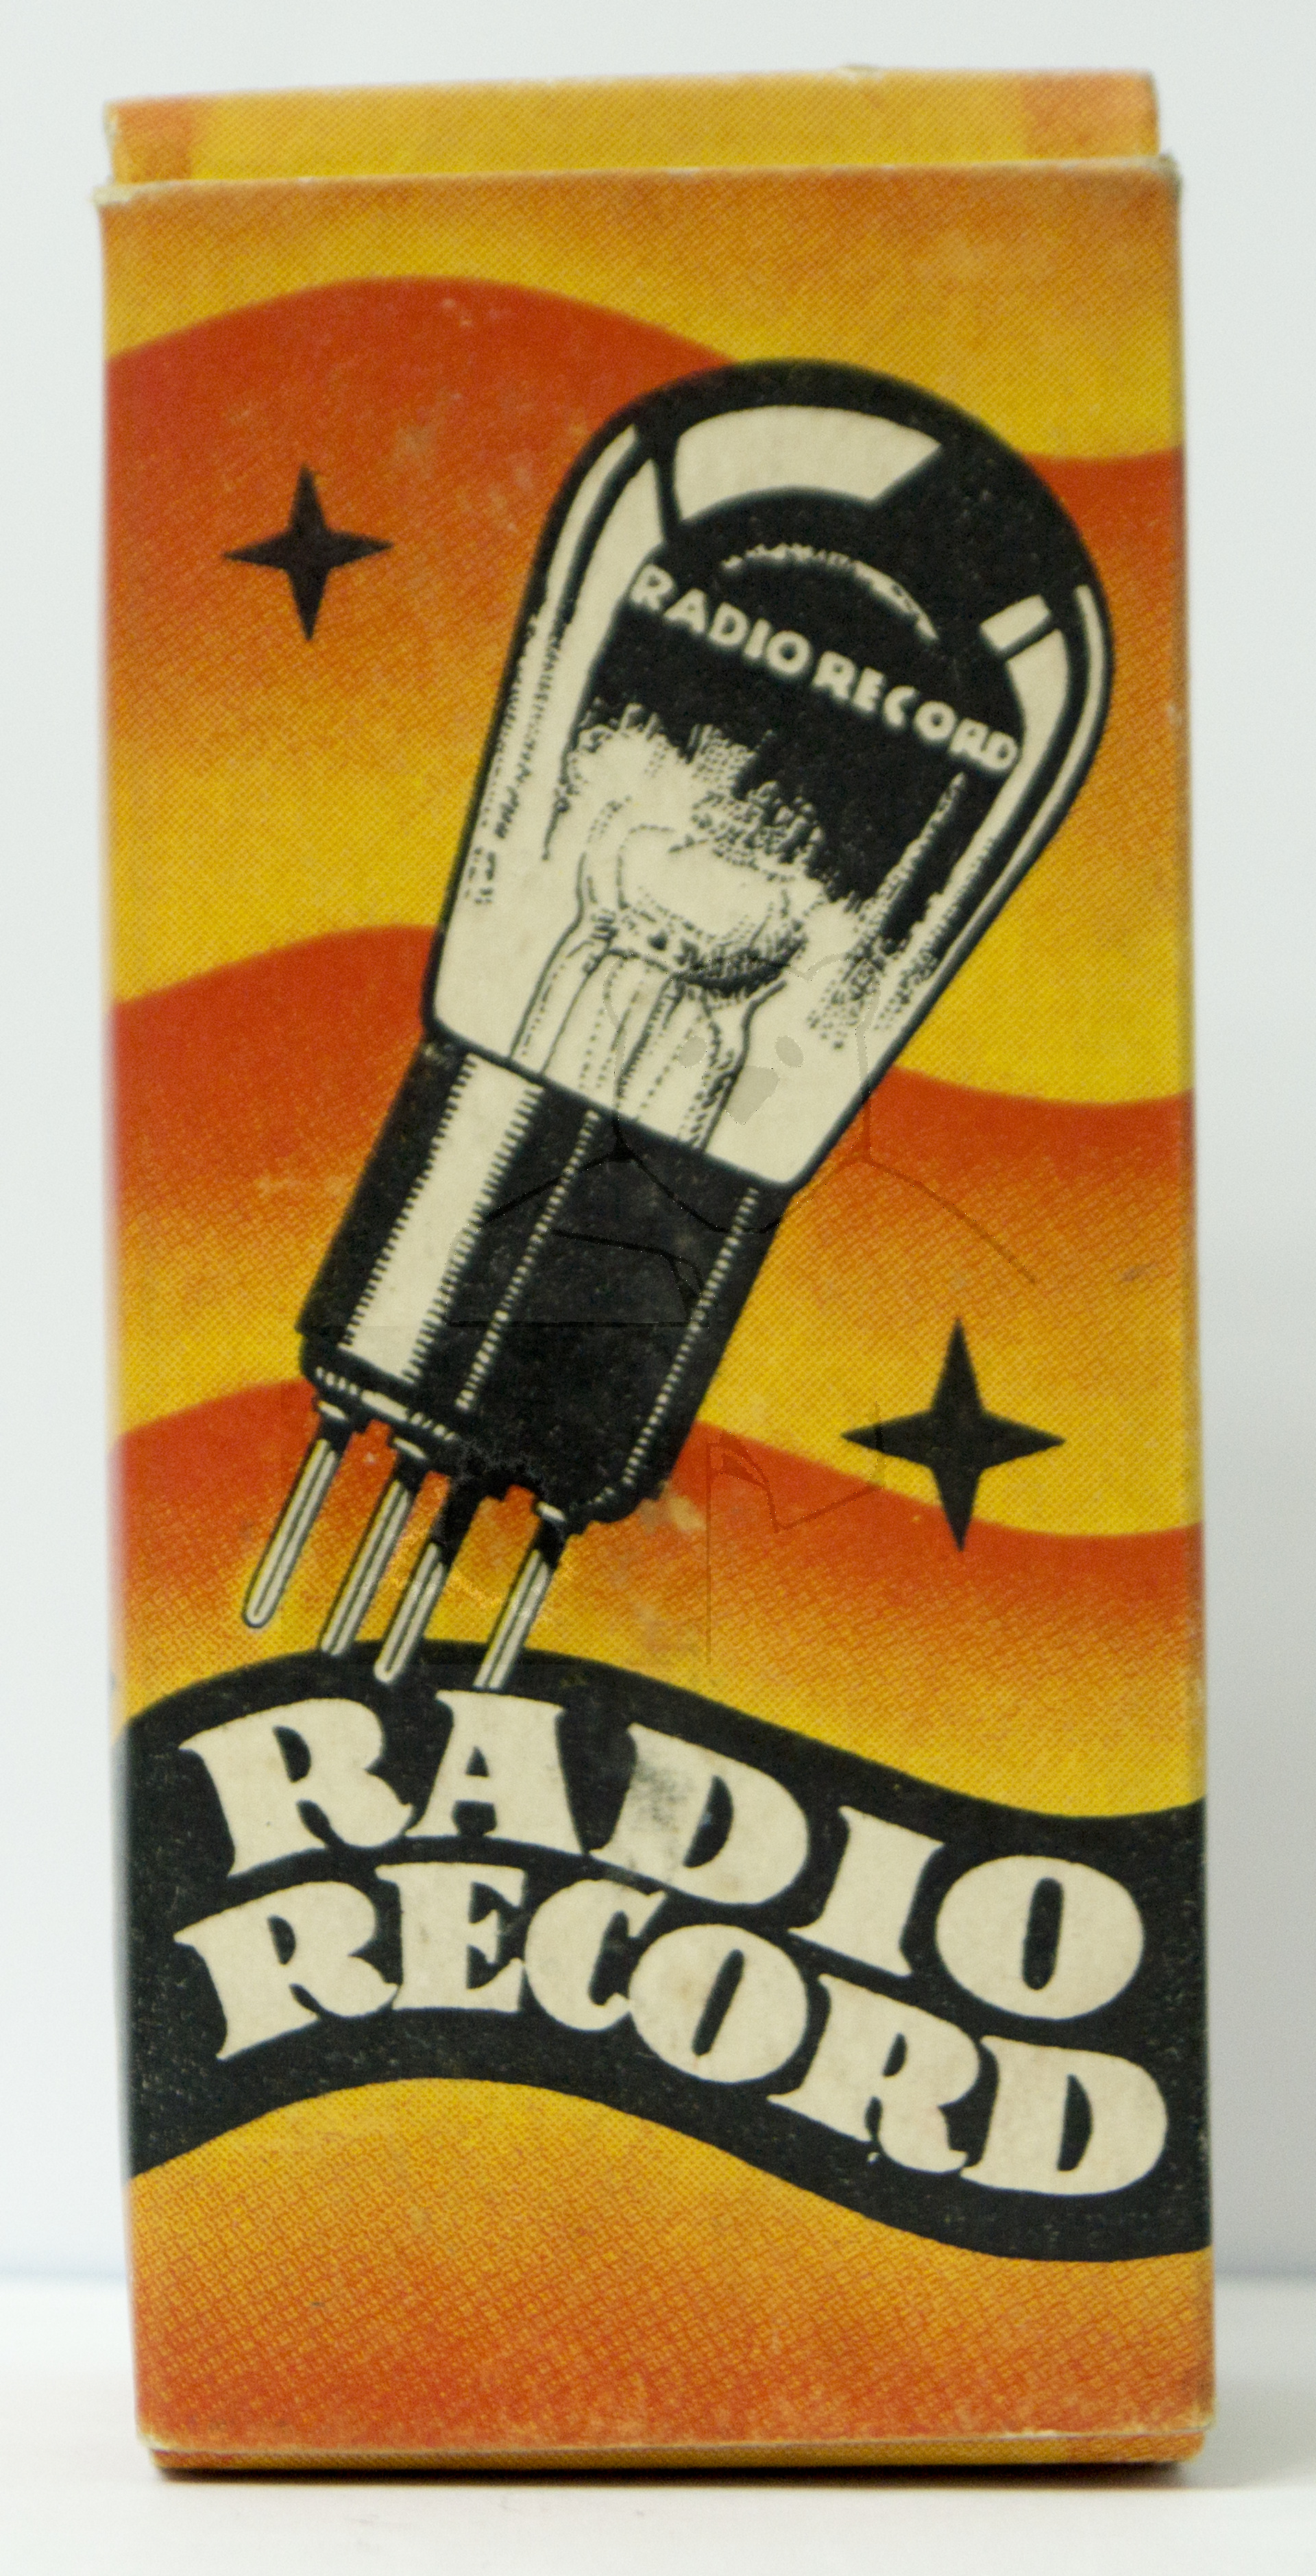 Röhre M300 (Radio Record) #7881 Verpackung Bild 1